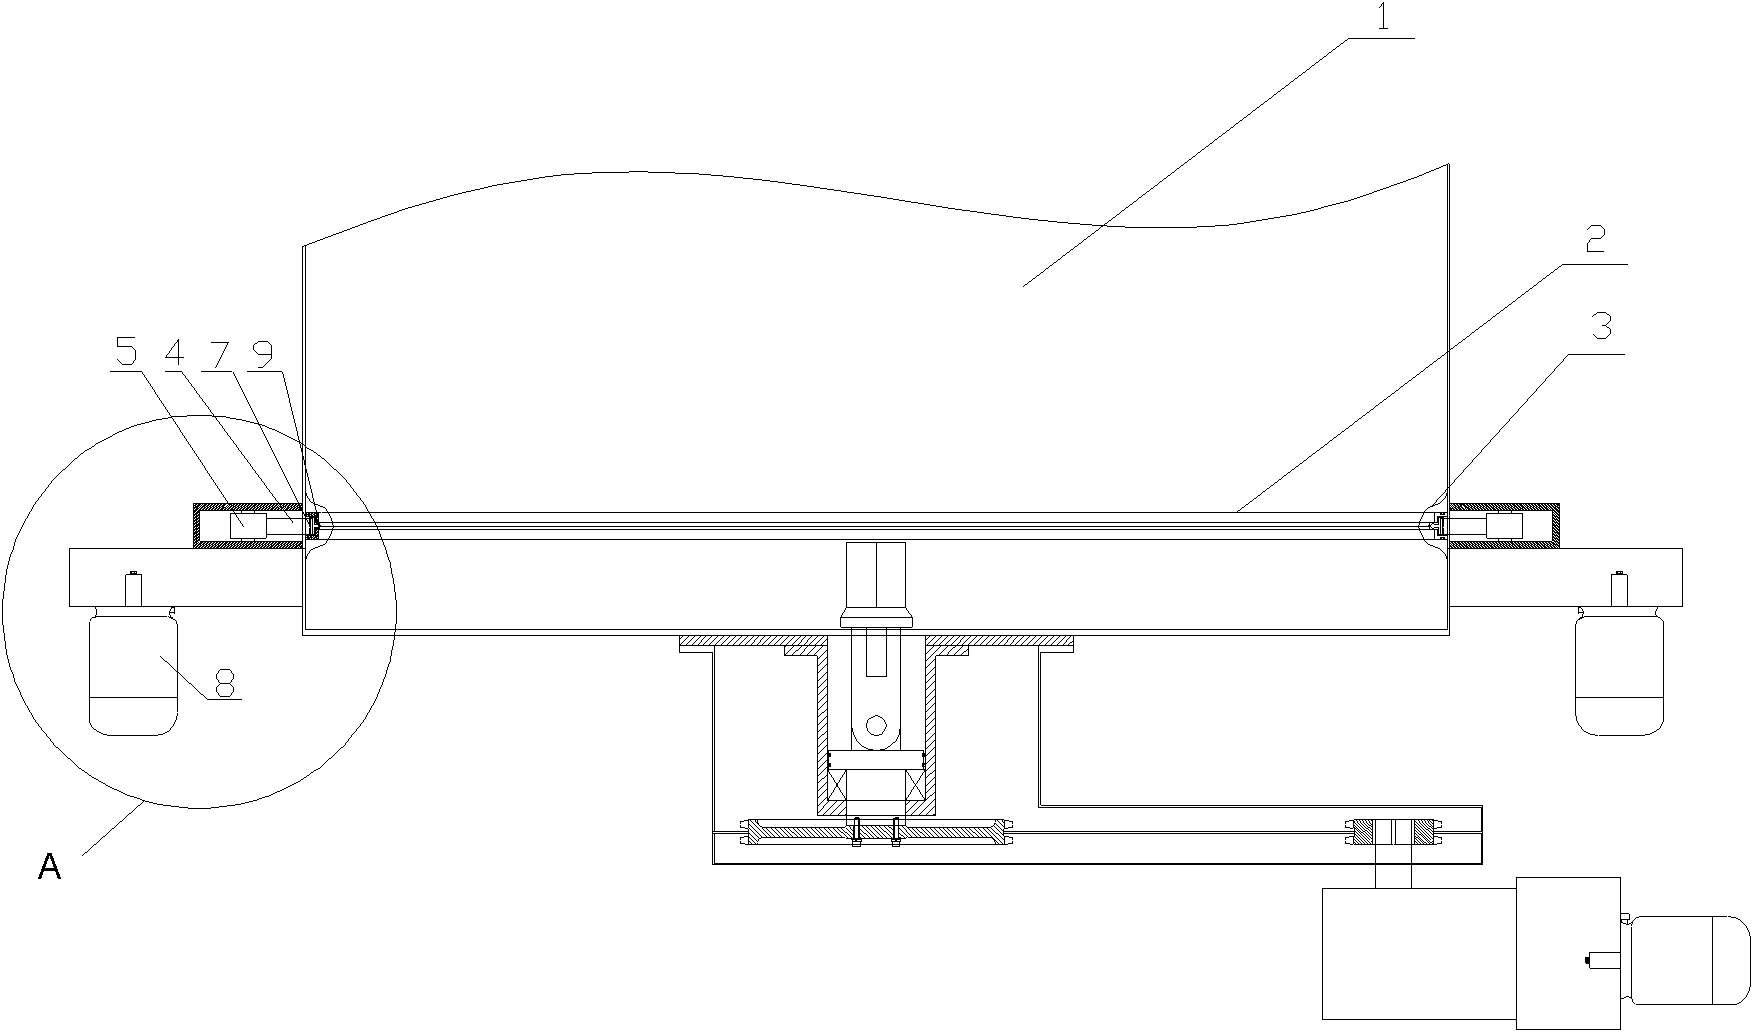 Reciprocating bridge-breaking scraper apparatus used in sludge bin